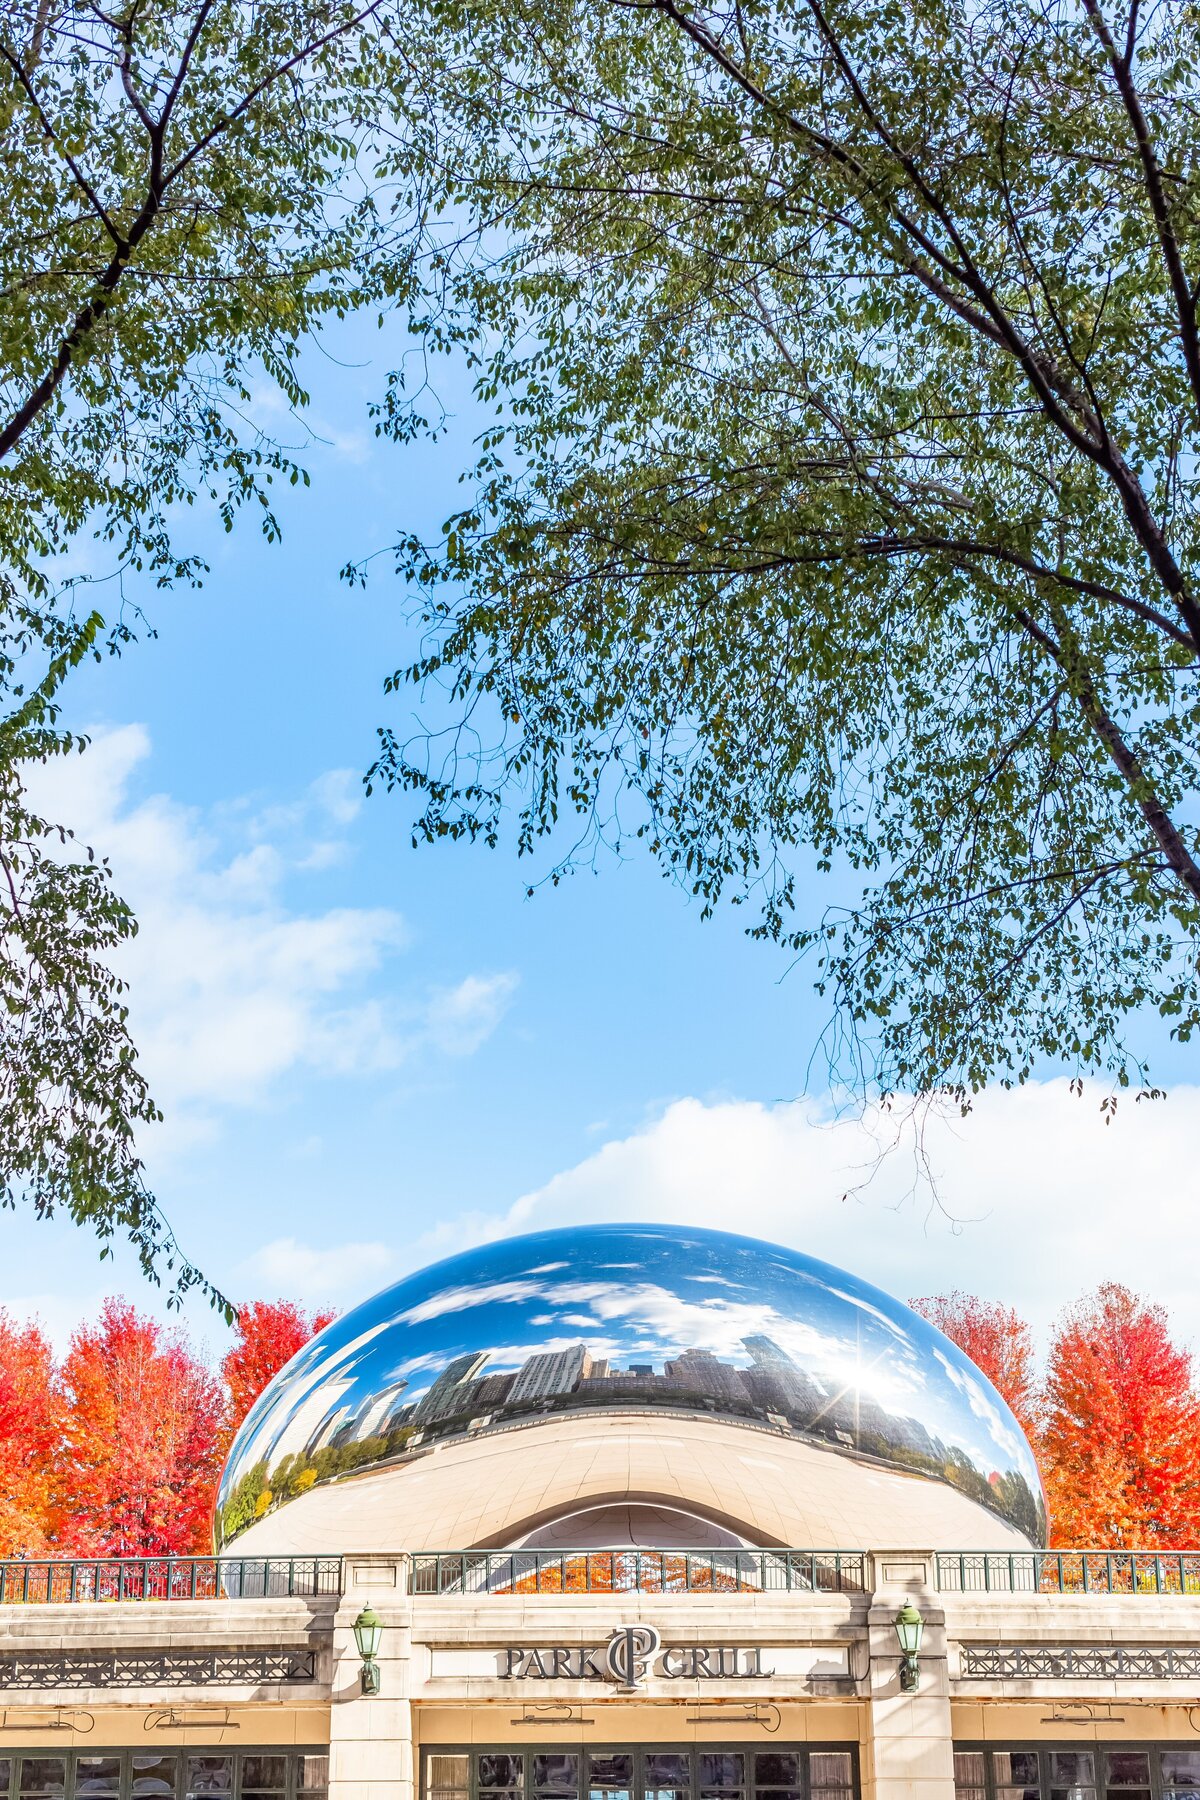 Chicago-illinois-City-2015-2019-2020-The-Bean-Millenium-Park-Museum-of-Science-Industry-0167